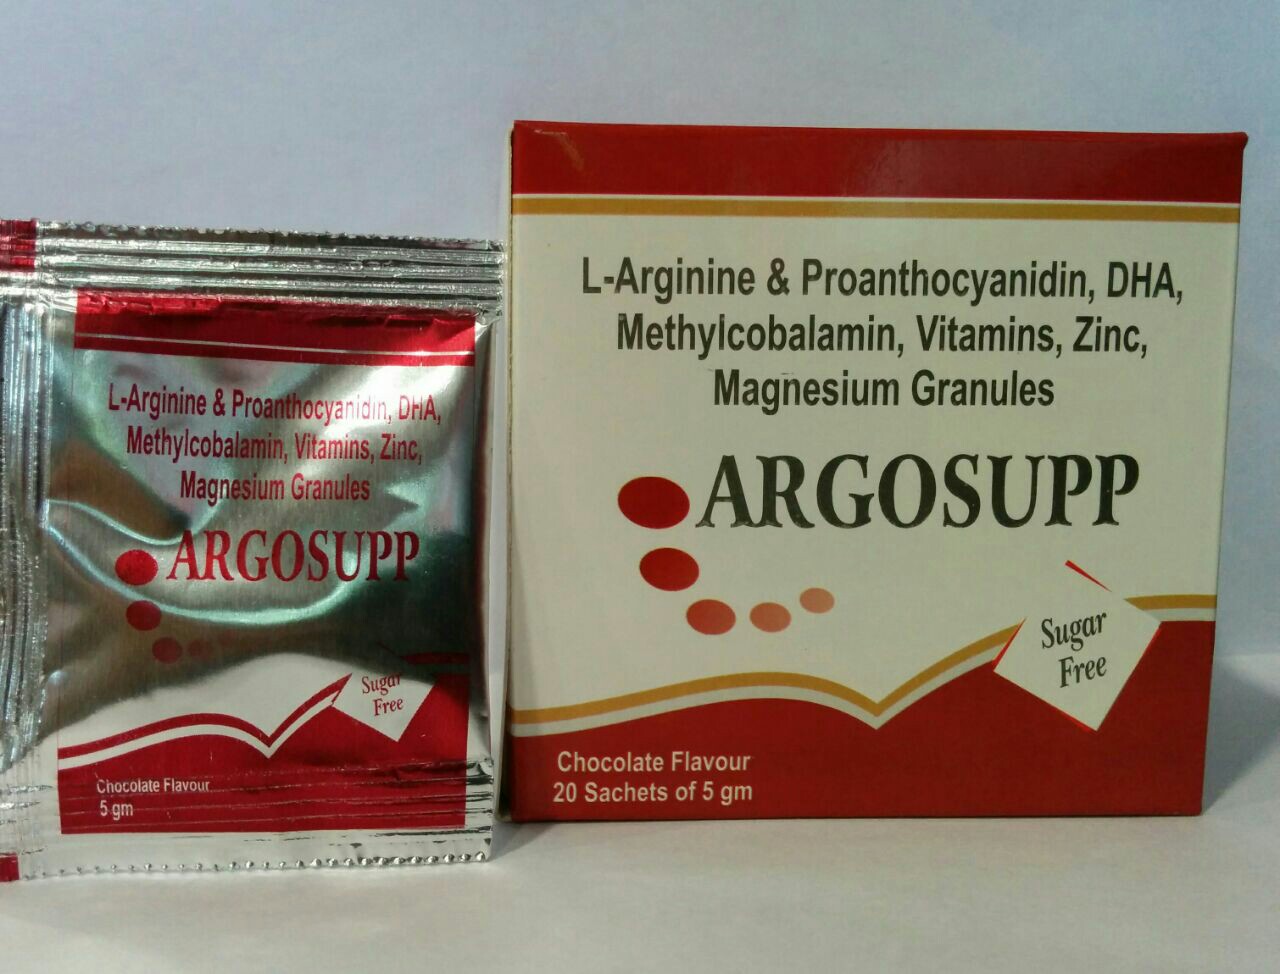 ARGOSUPP | L - Arginine + Proanthocynidin + DHA + Methylcobalamin + Vitamins + Folic Acid, + Zinc + Magneisum